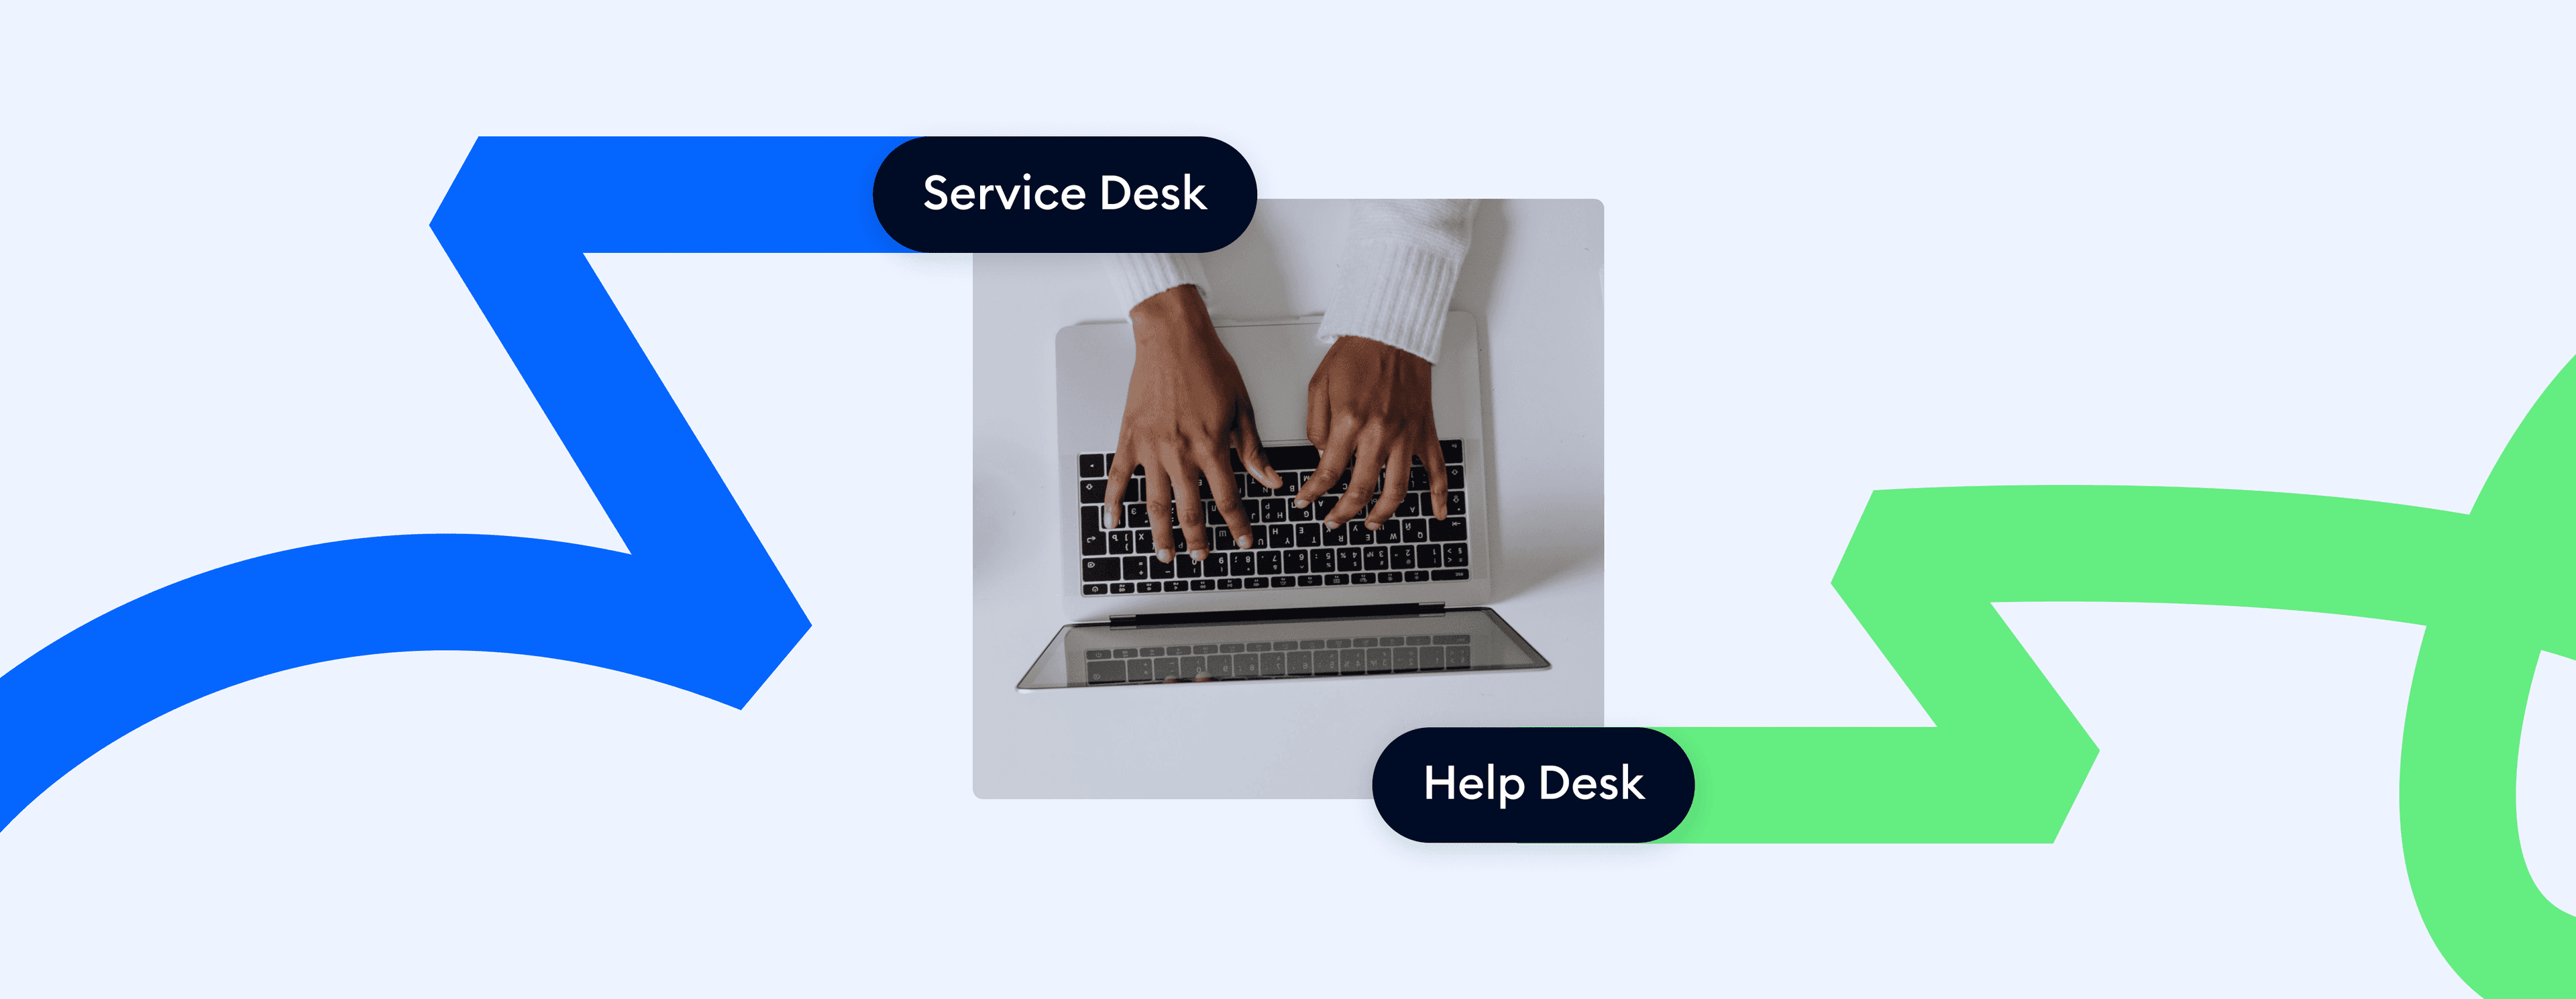 help desk vs service desk cover image